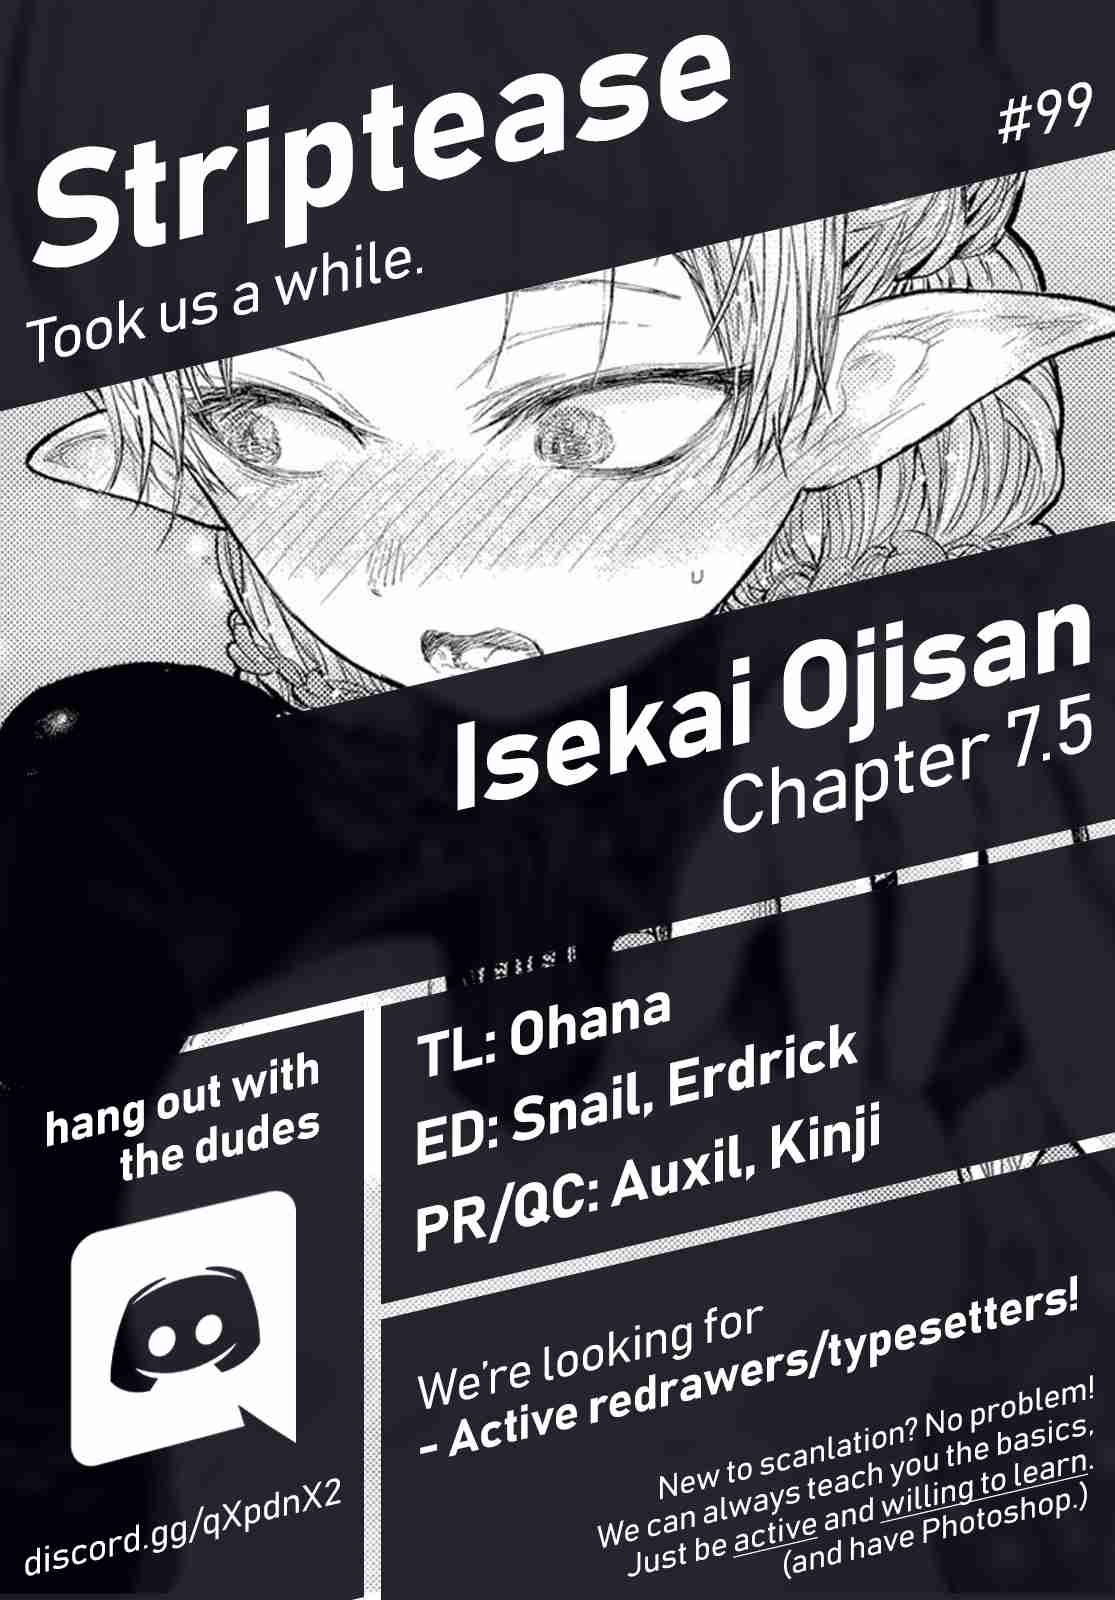 Isekai Ojisan Vol. 1 Ch. 7.5